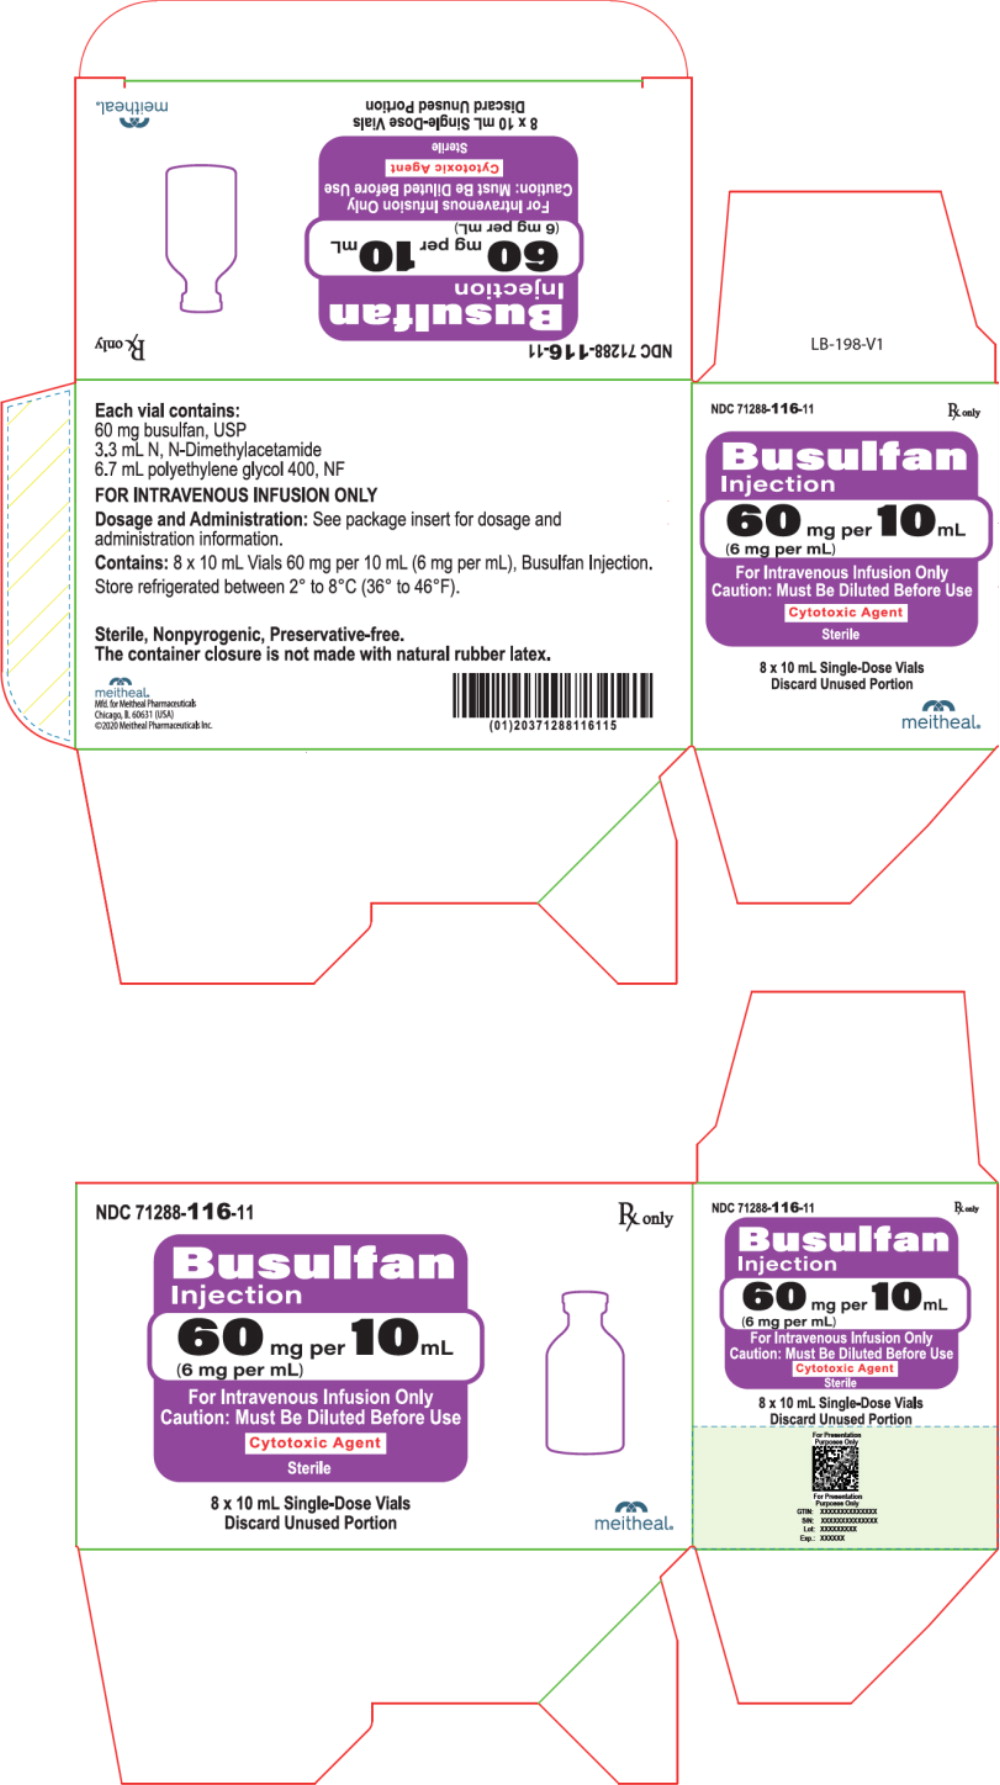 Principal Display Panel - Busulfan Injection 60 mg Carton
